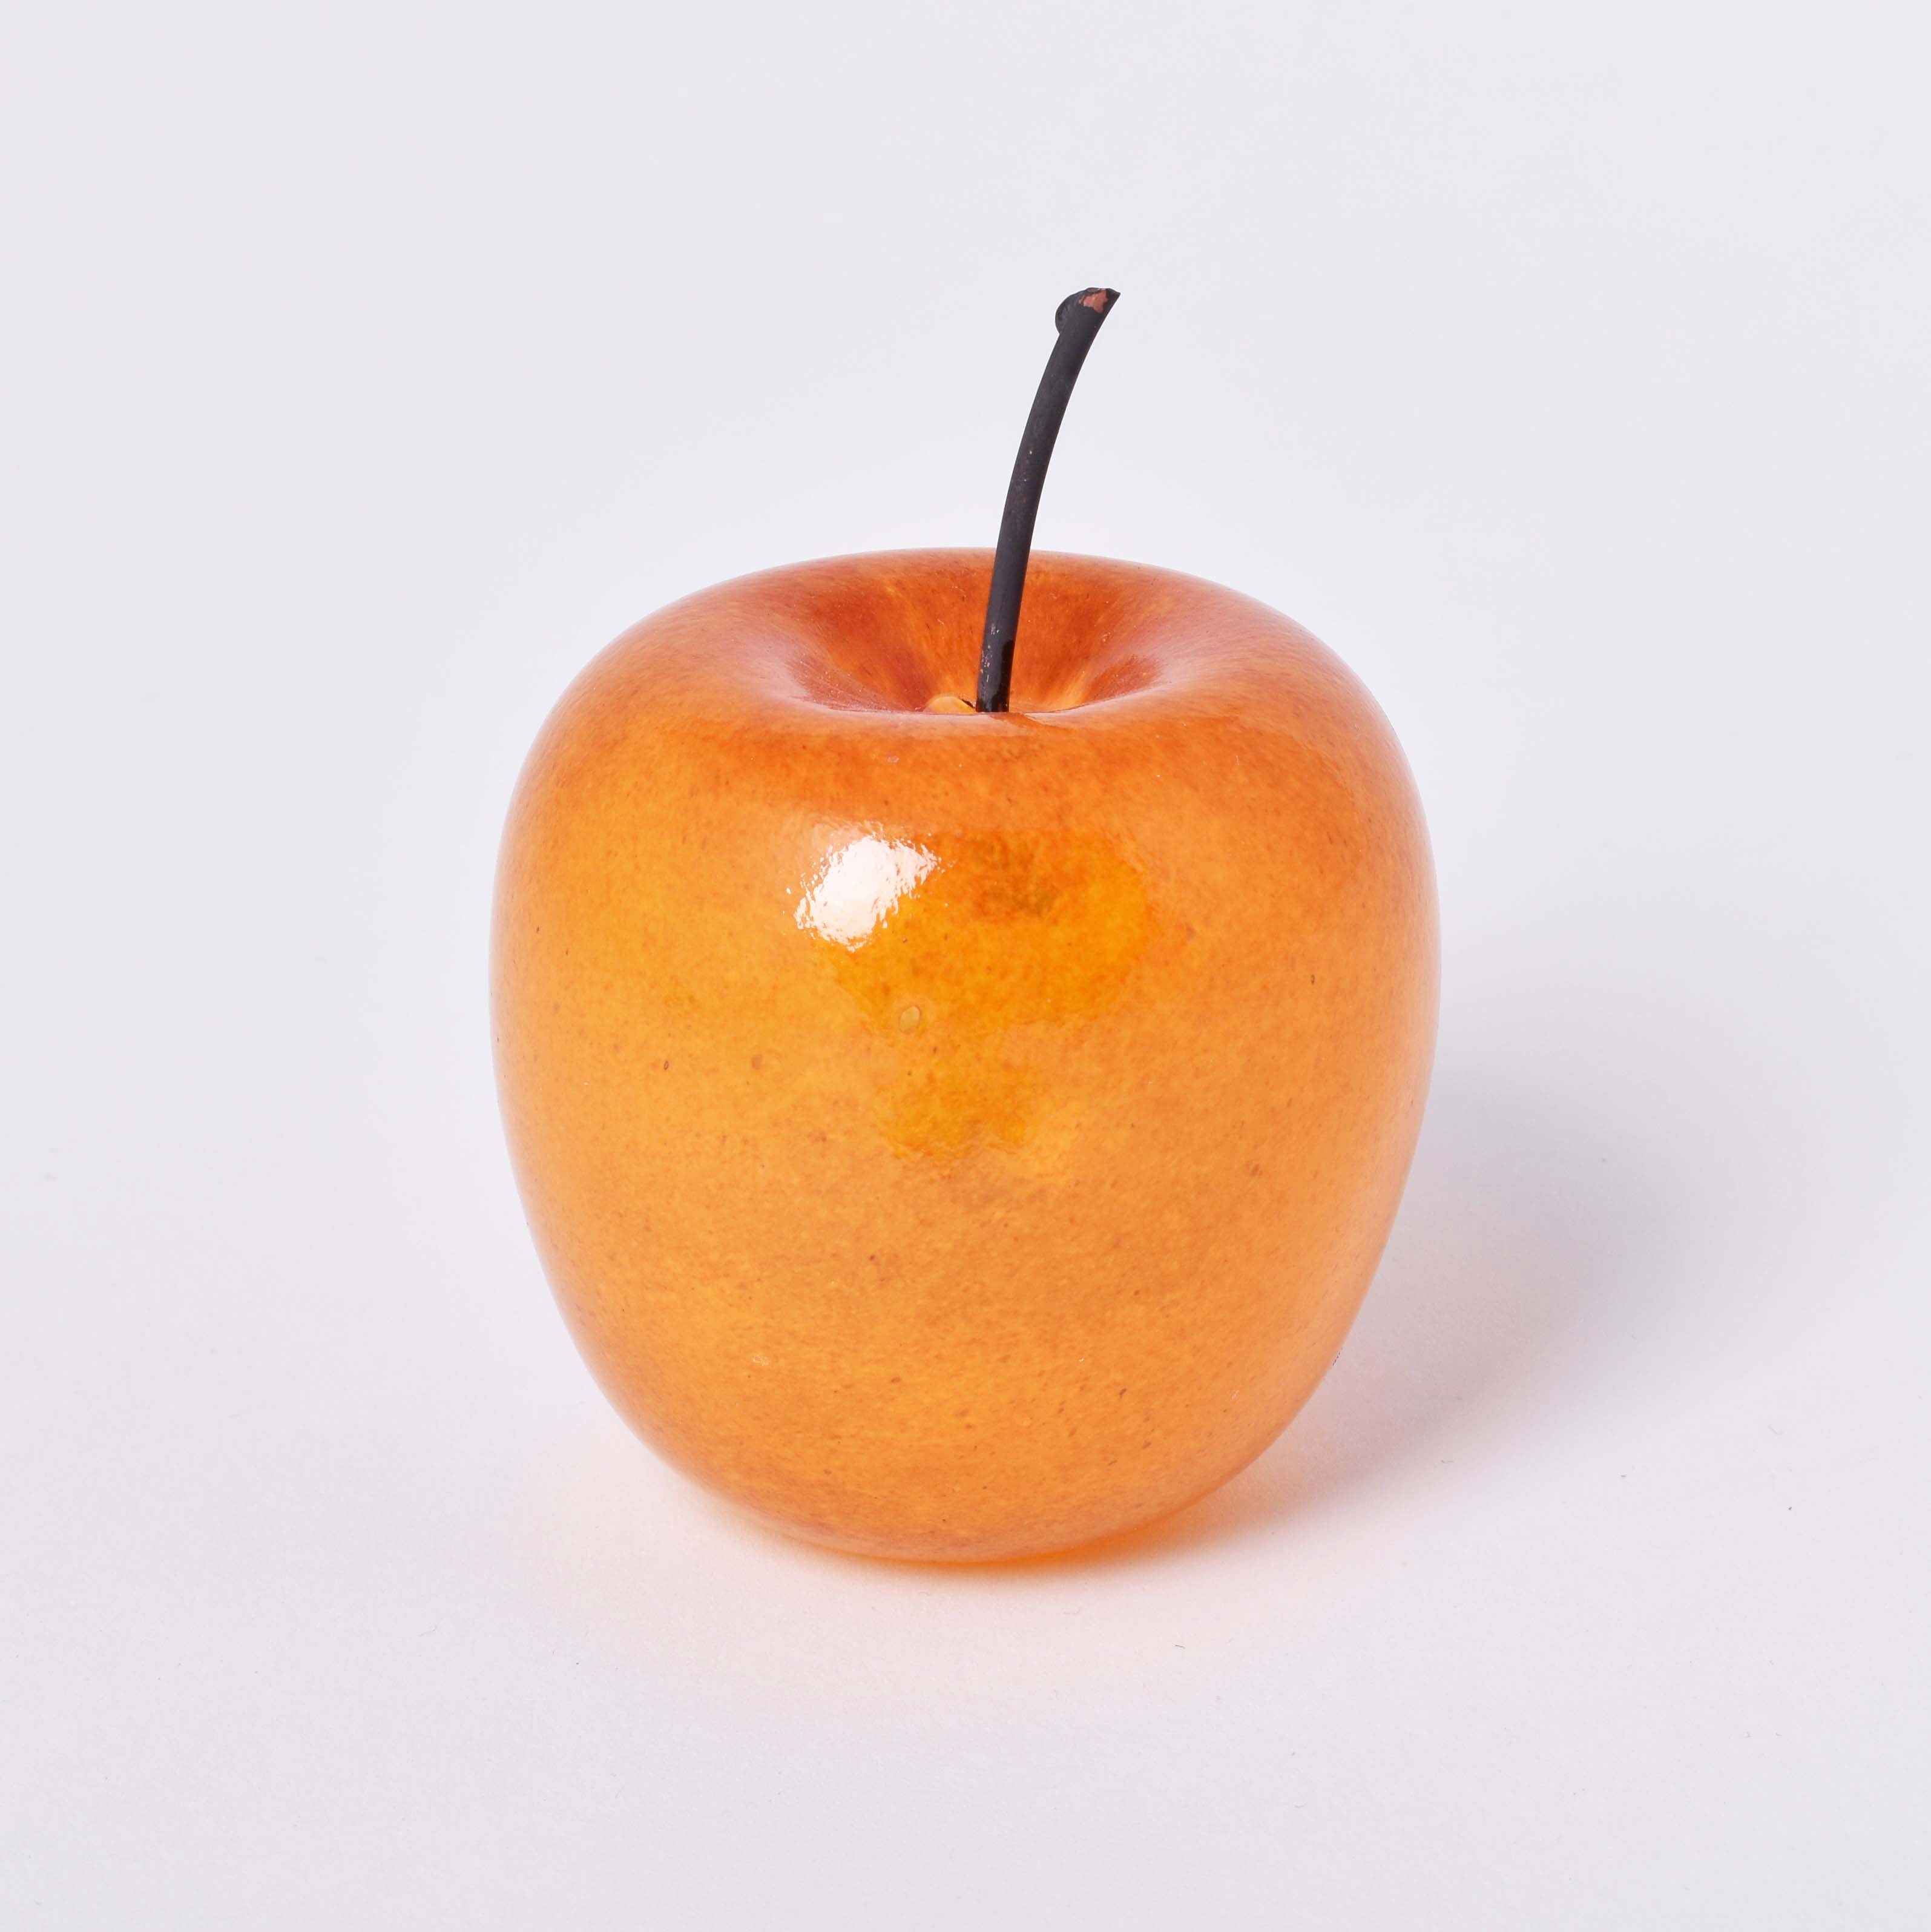 Orange äpple i glas med skaft i koppar av Gunilla Kihlgren